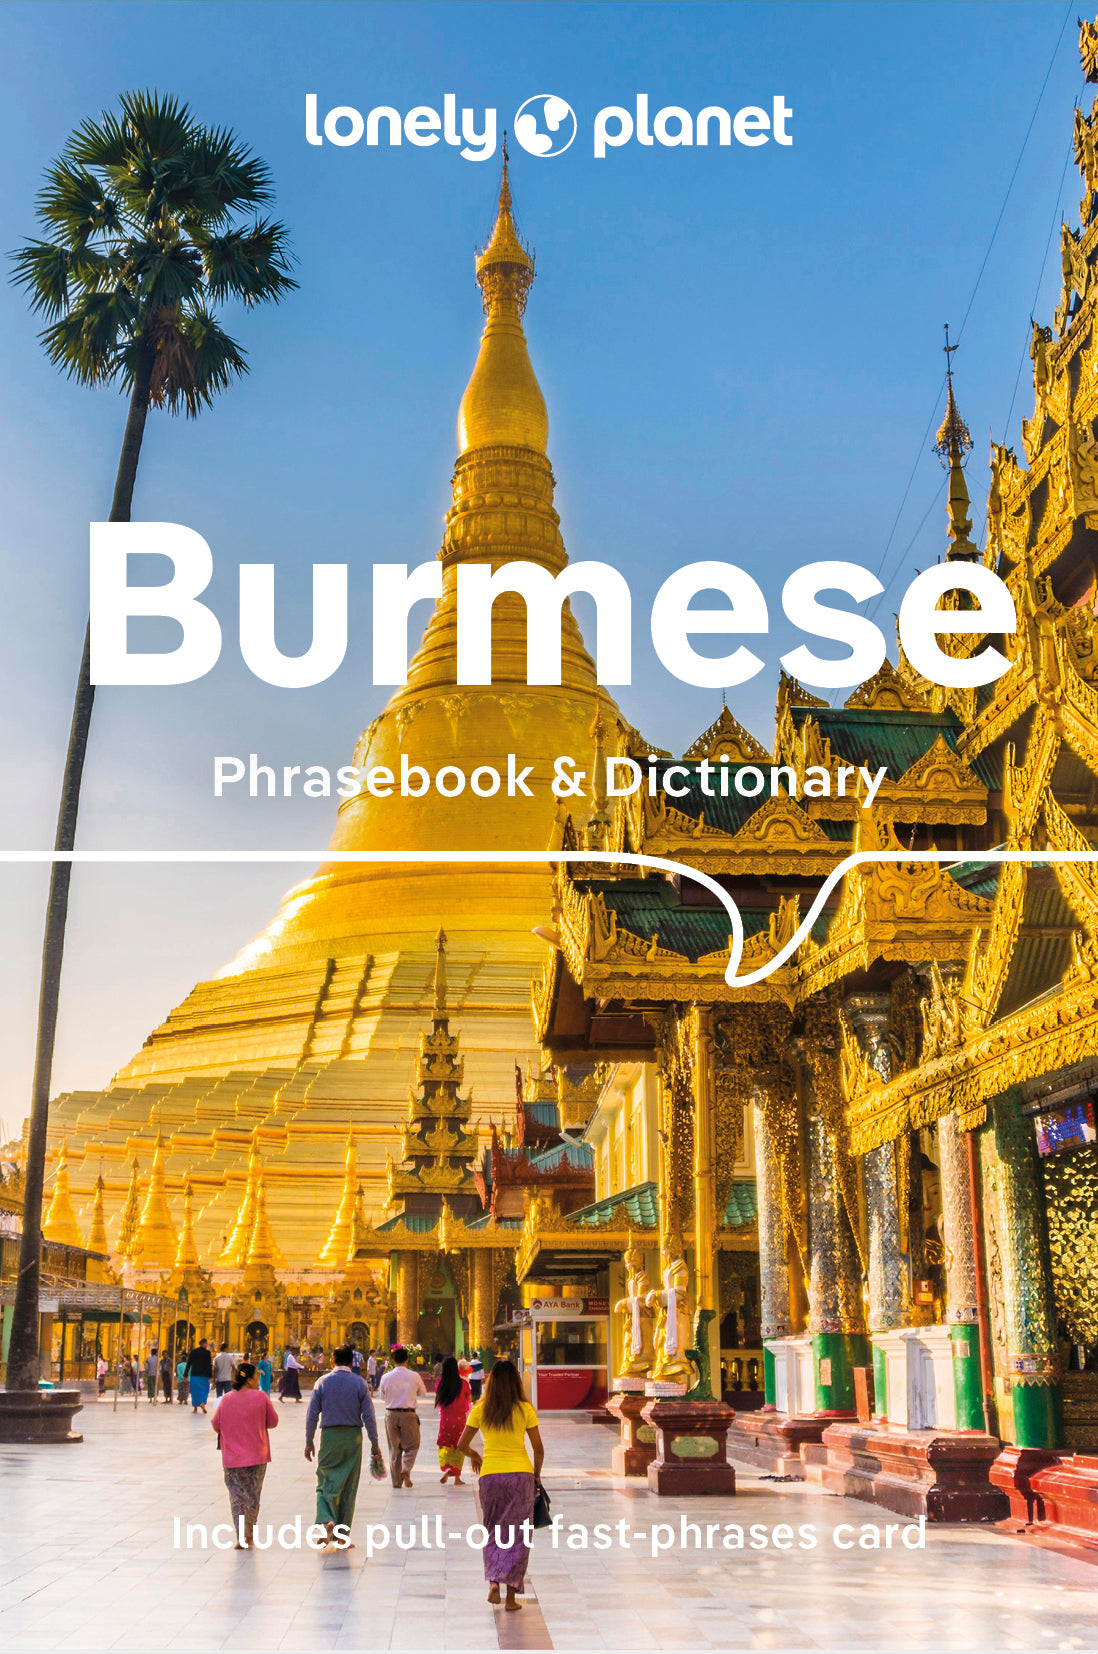 Burmese Phrasebook & Dictionary